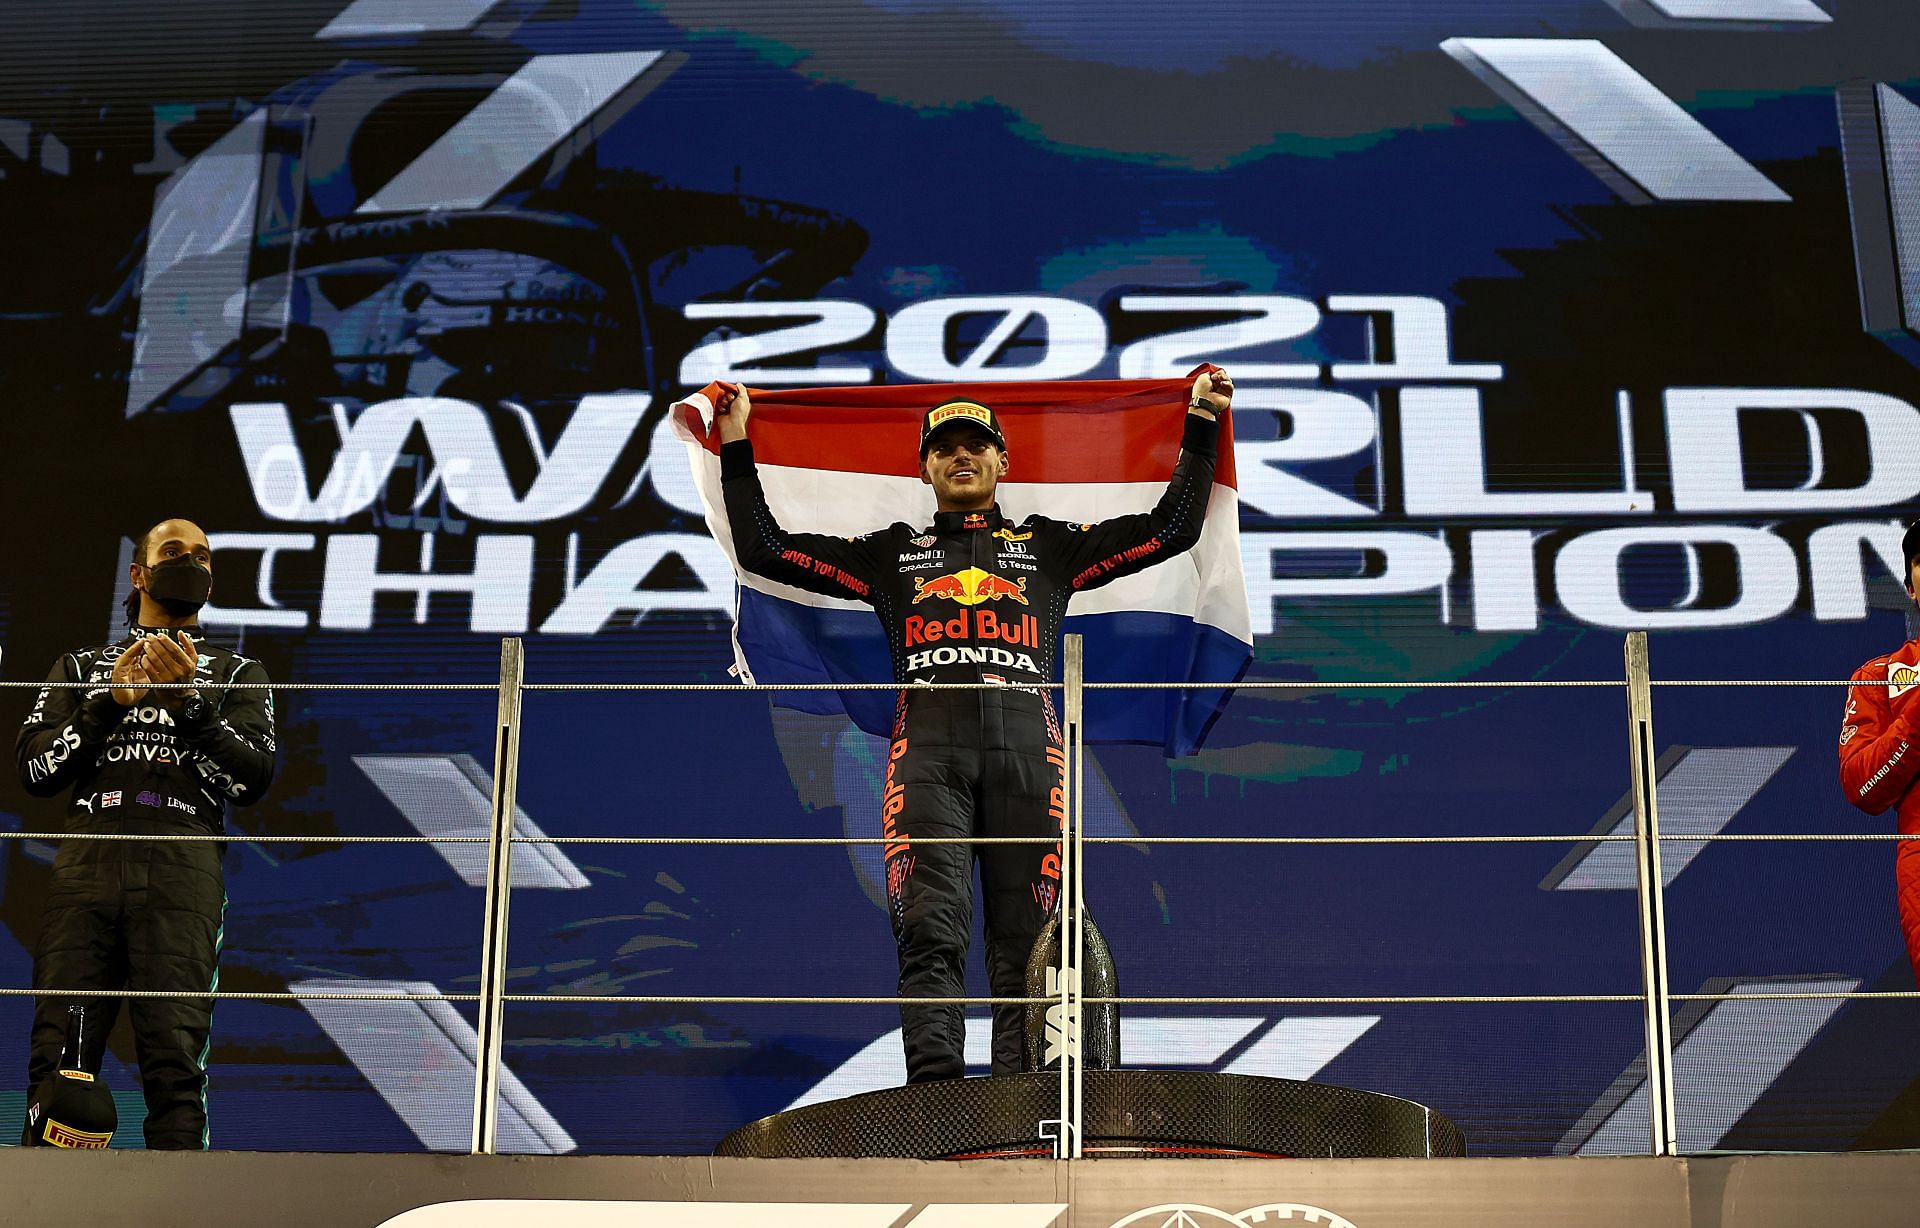 Max Verstappen celebrating the World Championship win during the Abu Dhabi Grand Prix 2021